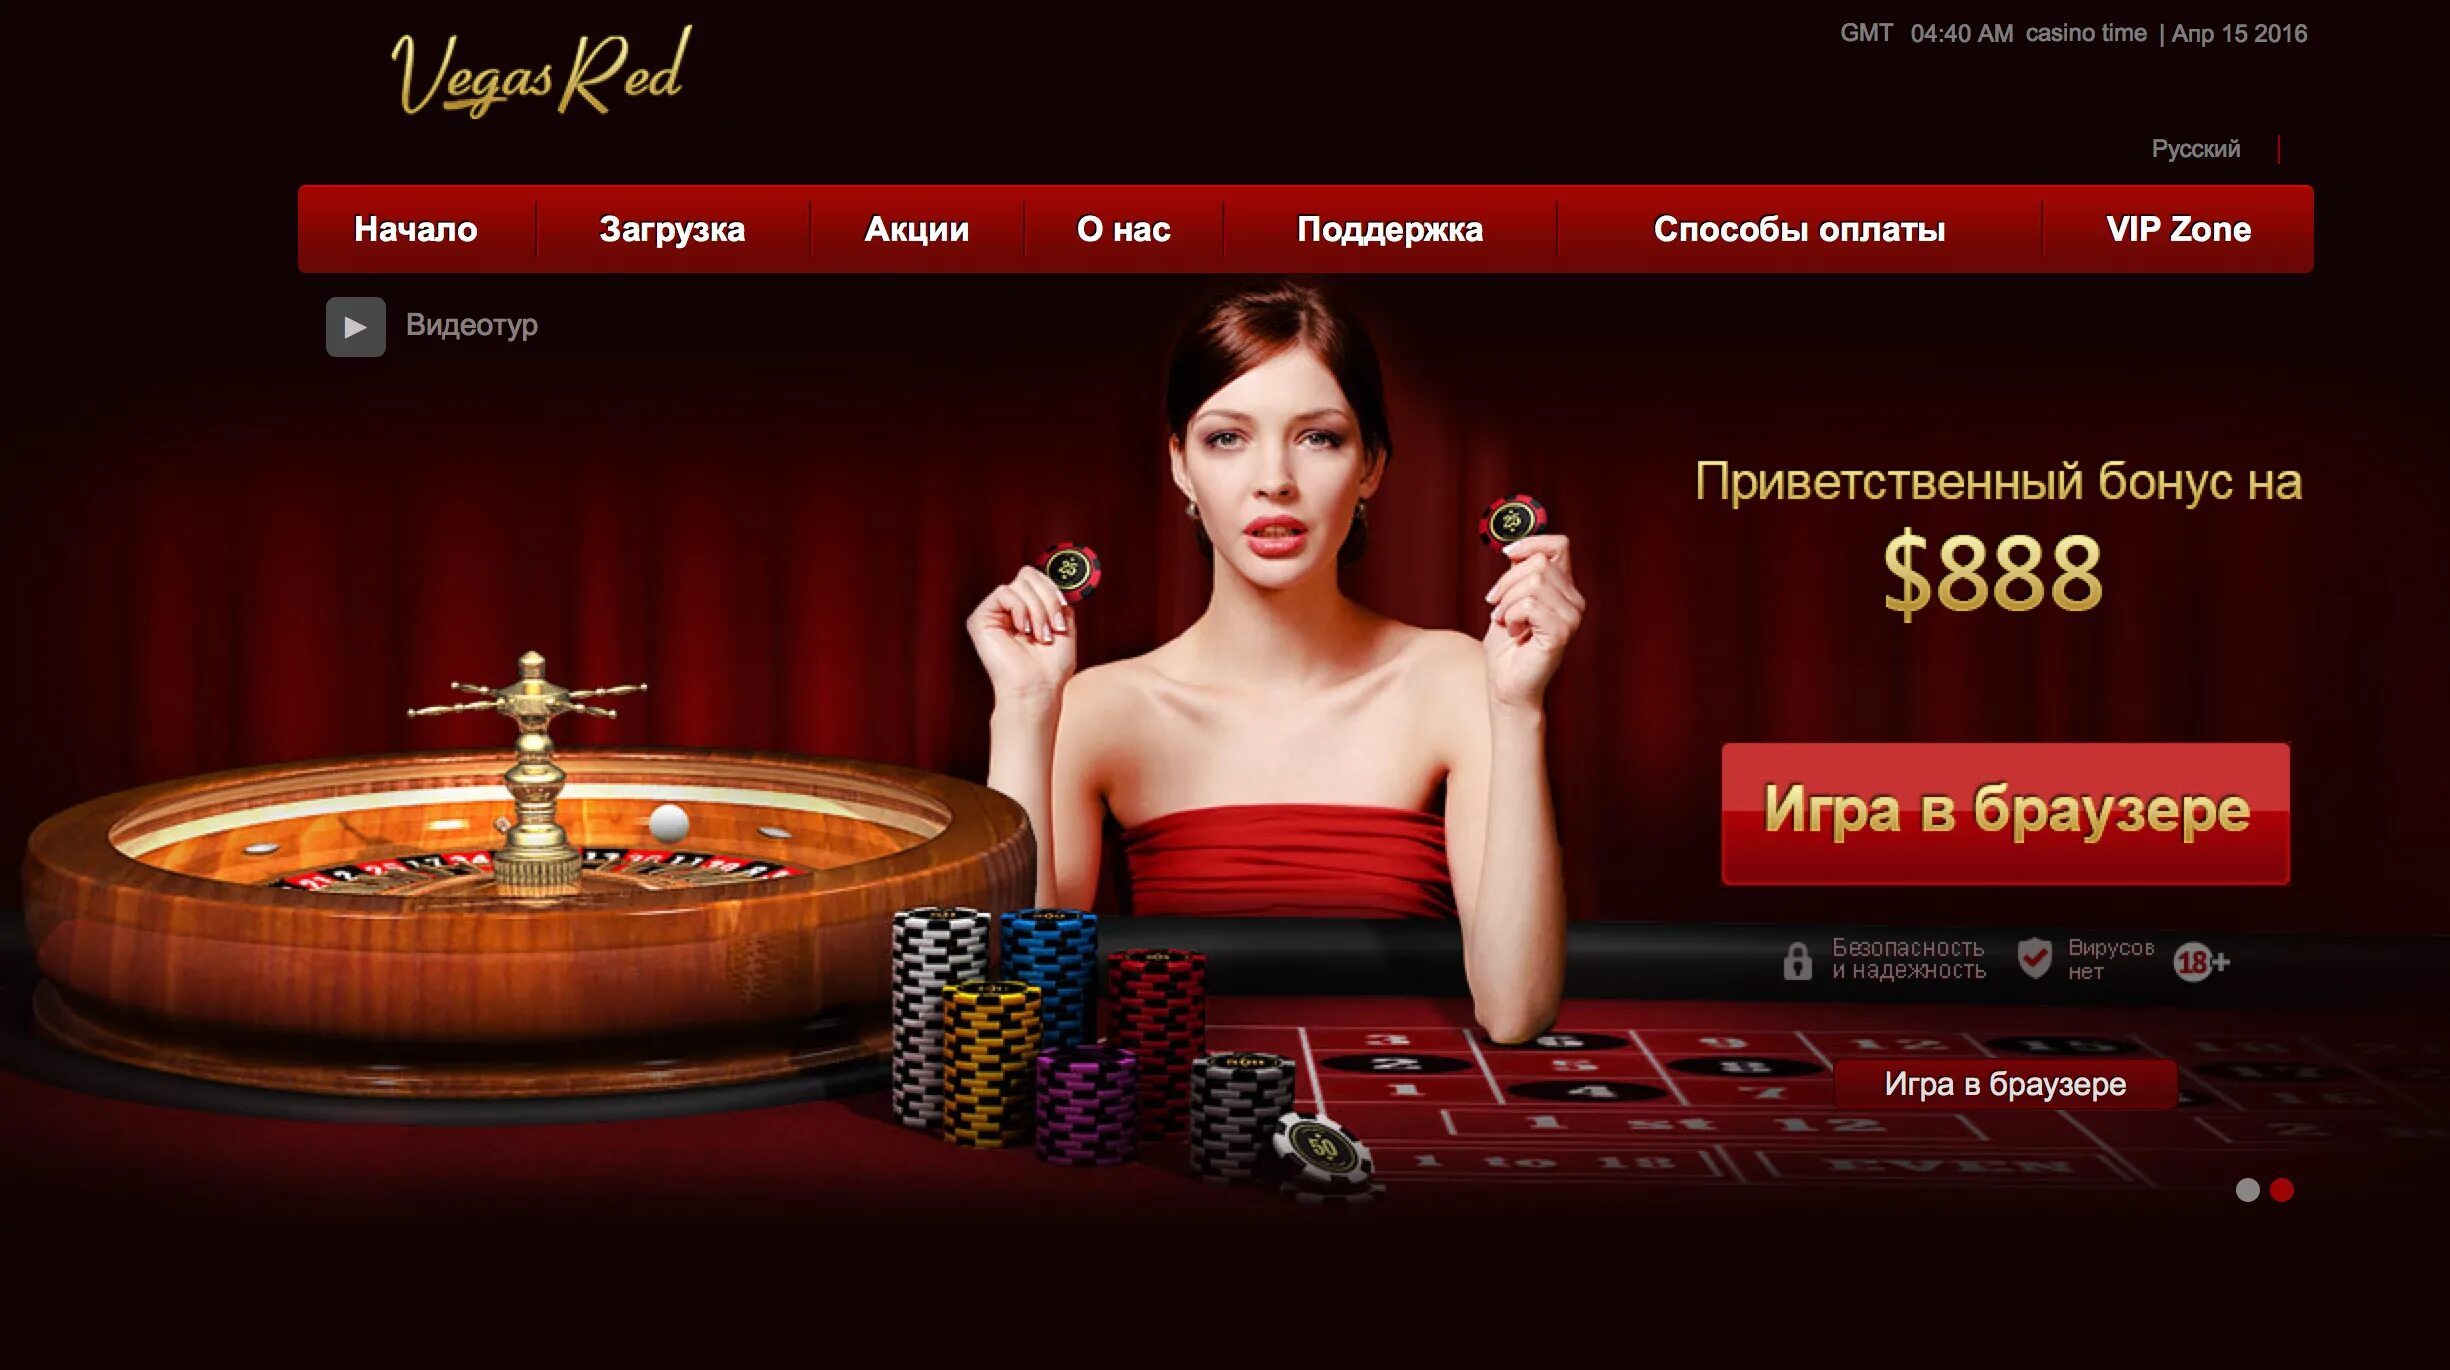 Casino сайт pingotop. Казино. Интернет казино. Сайты казино. Реклама казино.